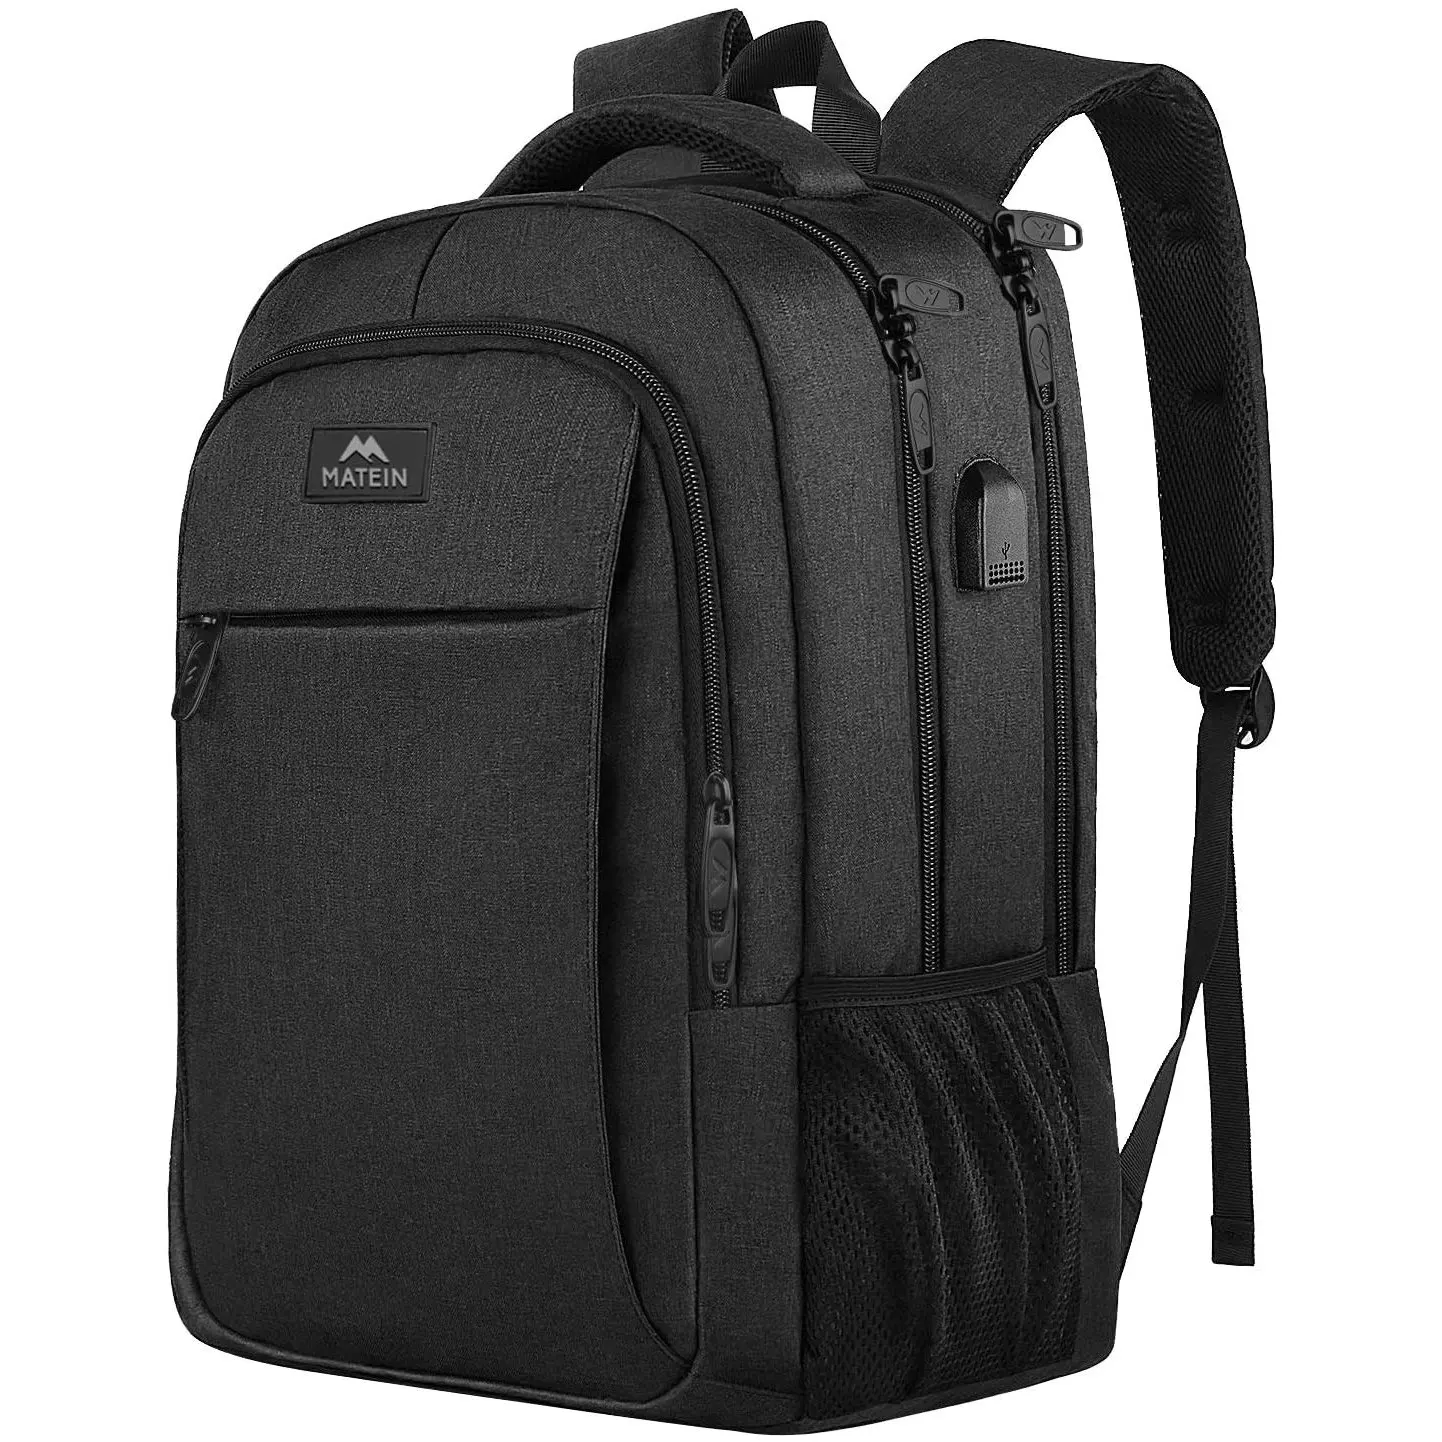 Wholesale Large Waterproof School Laptop Bag For Women Men Kids